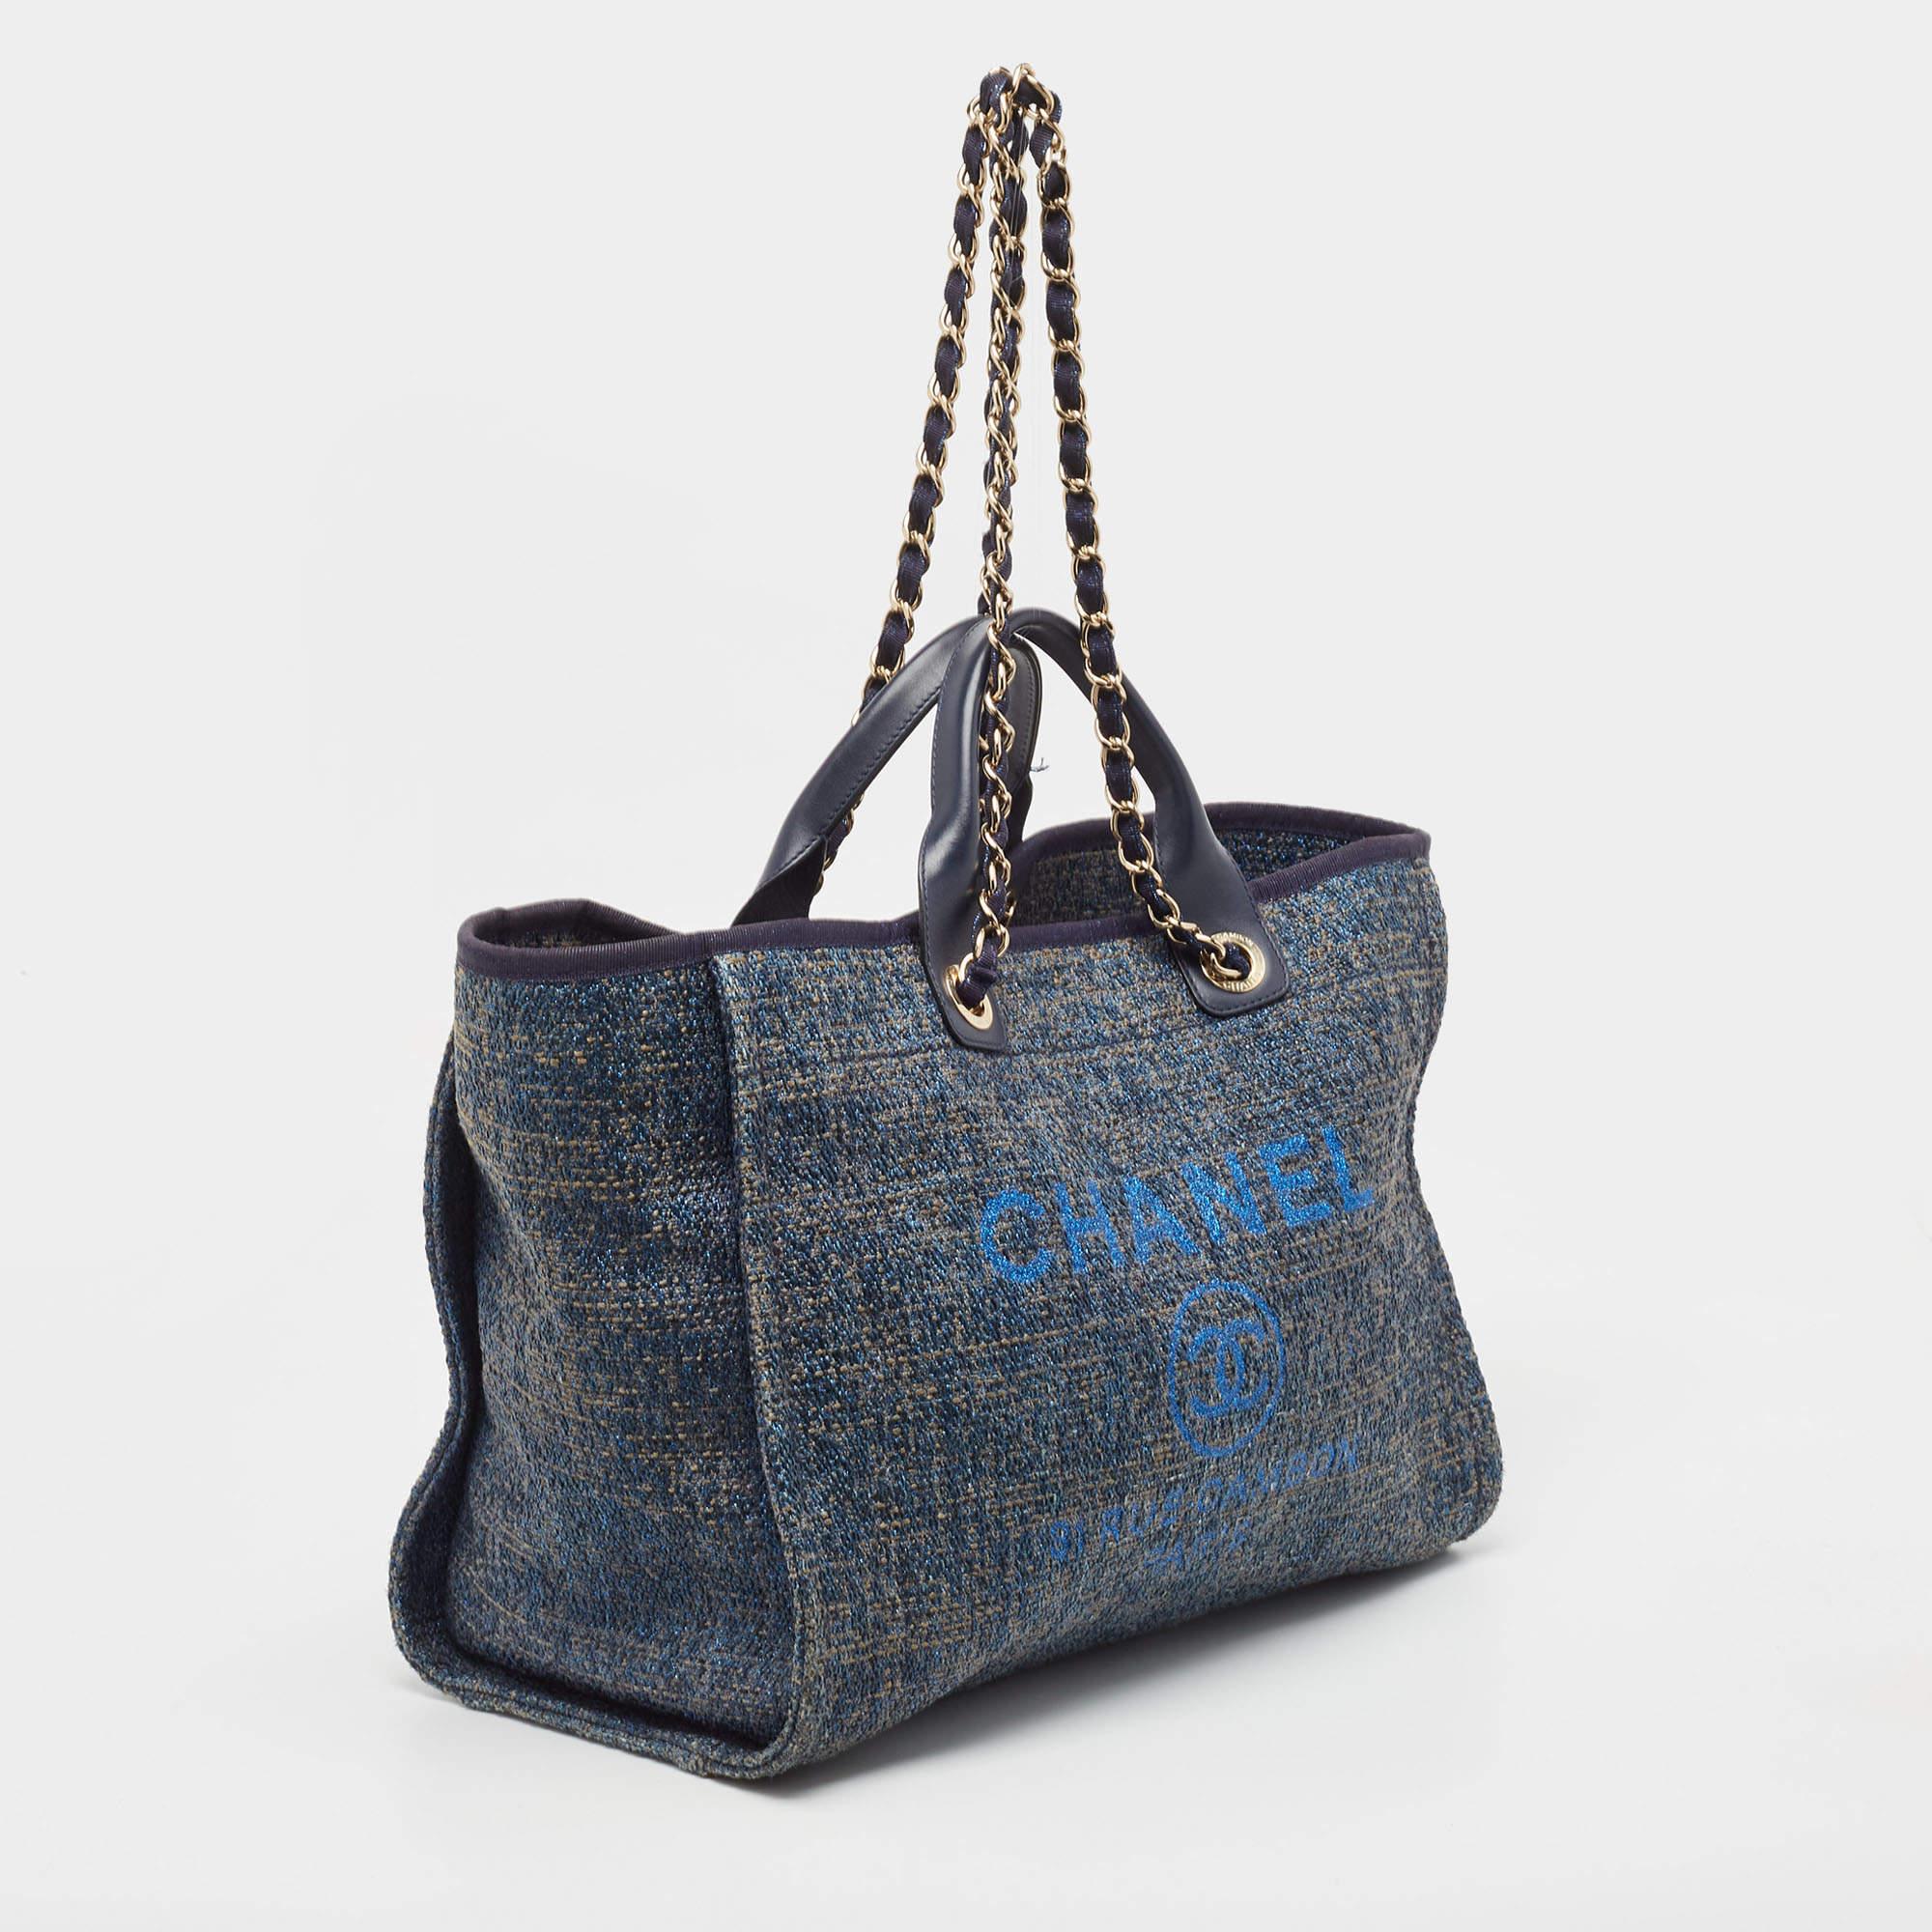 Chanel Blue Raffia and Leather Medium Deauville Tote 1